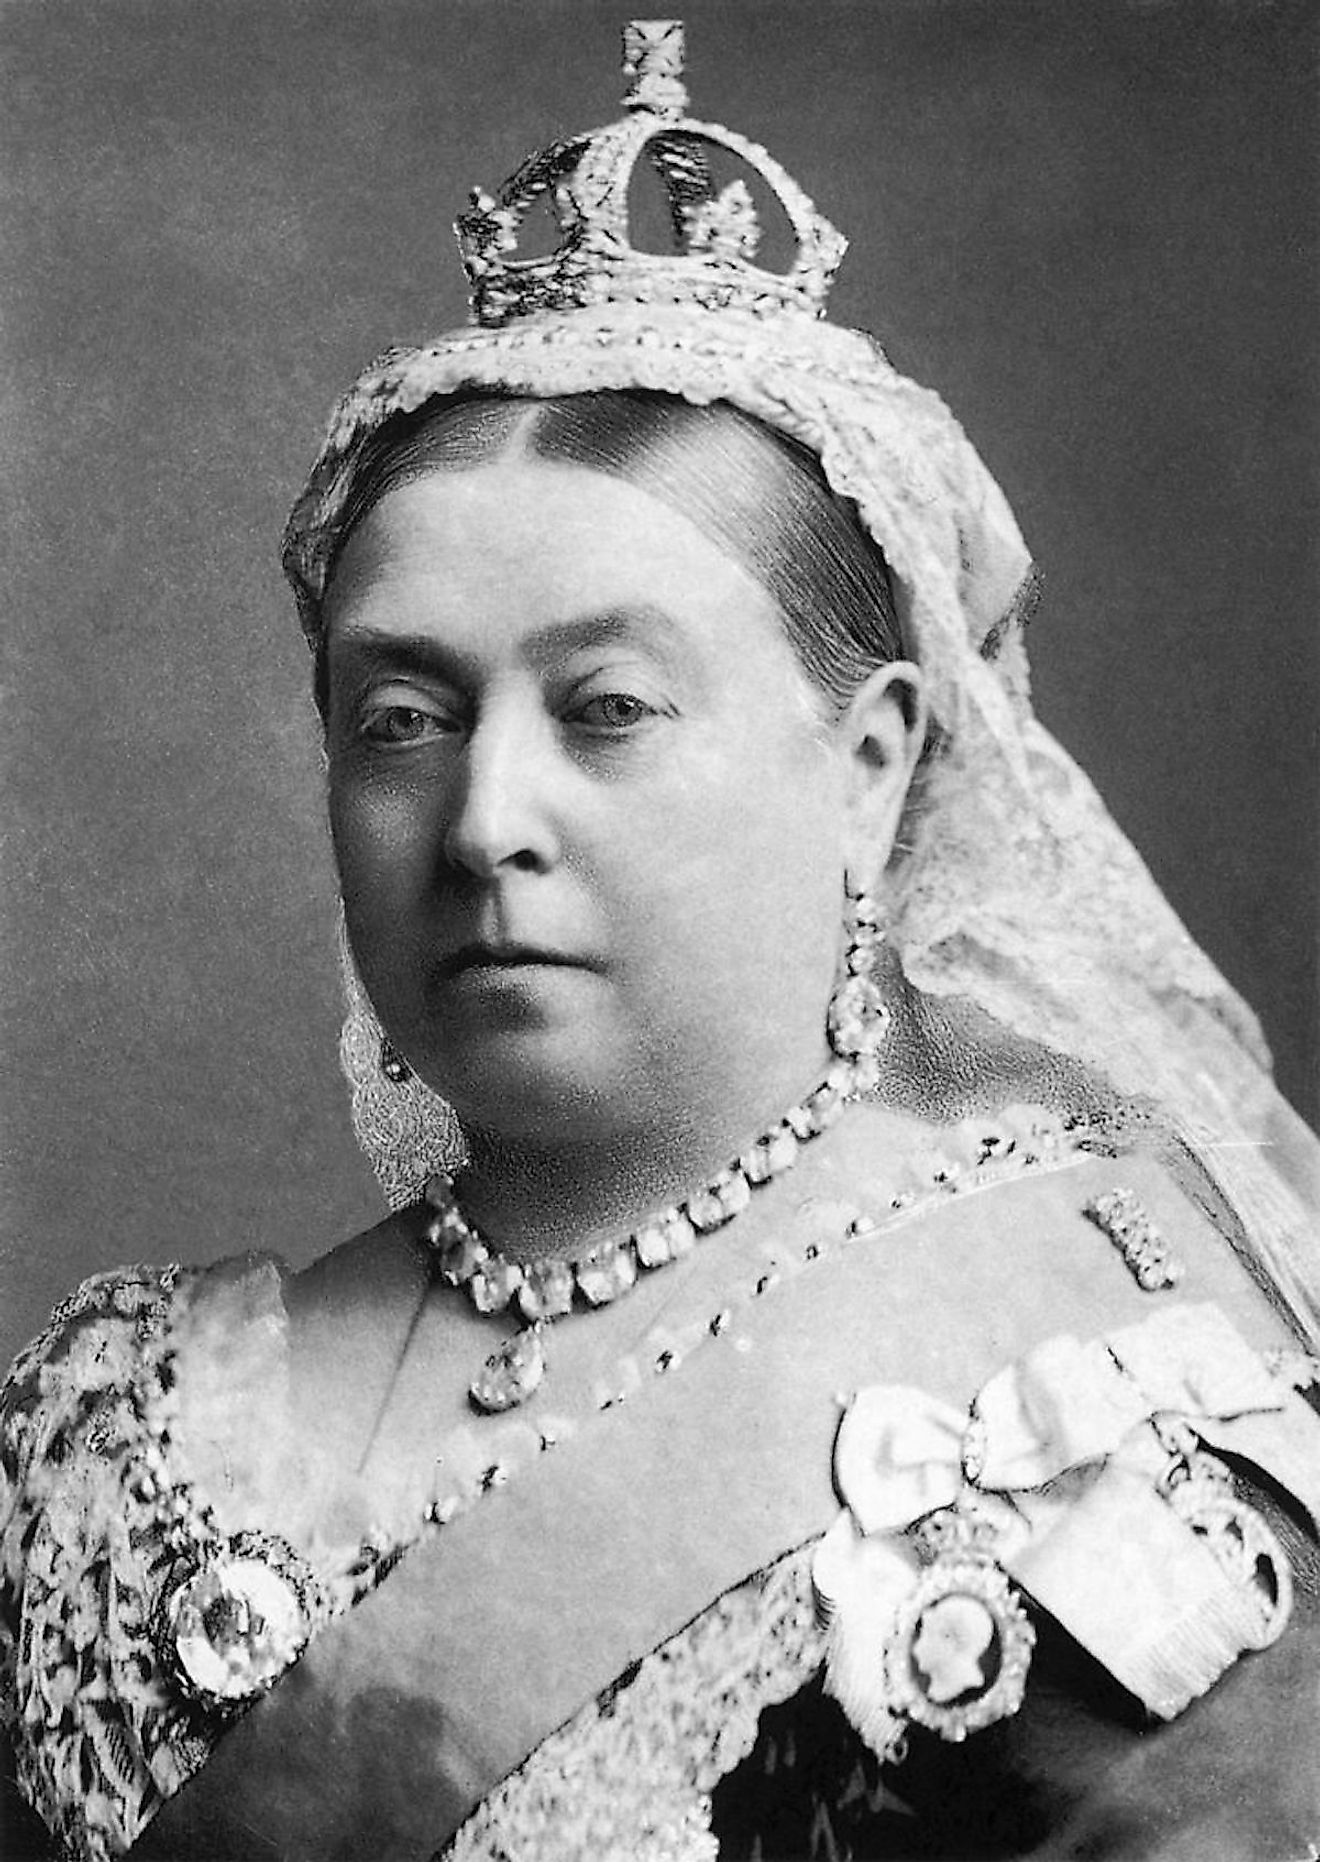 Photograph of Queen Victoria, 1882. Image credit: Alexander Bassano/Public domain